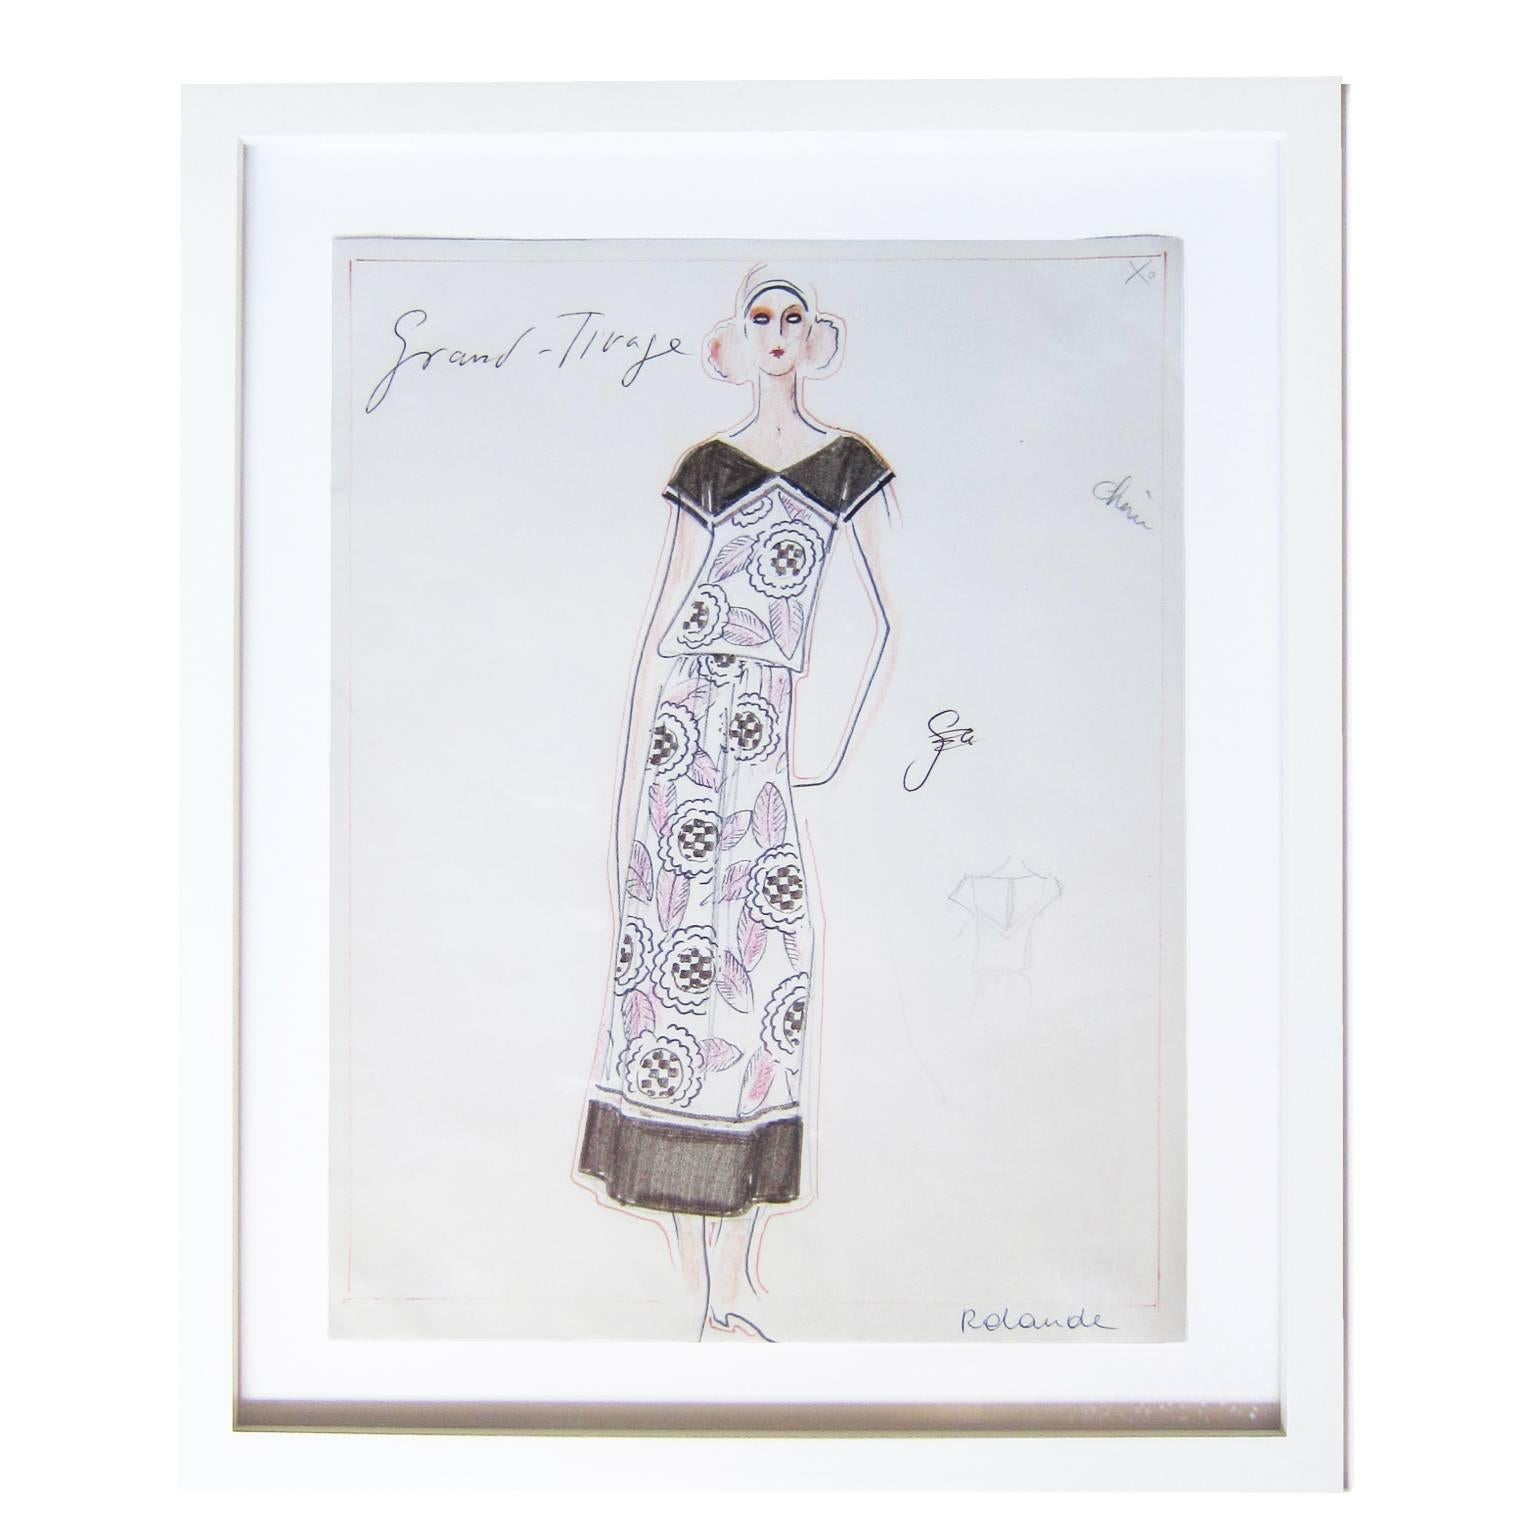 KARL LAGERFELD (1933-2019), Two fashion design sketches | Christie's